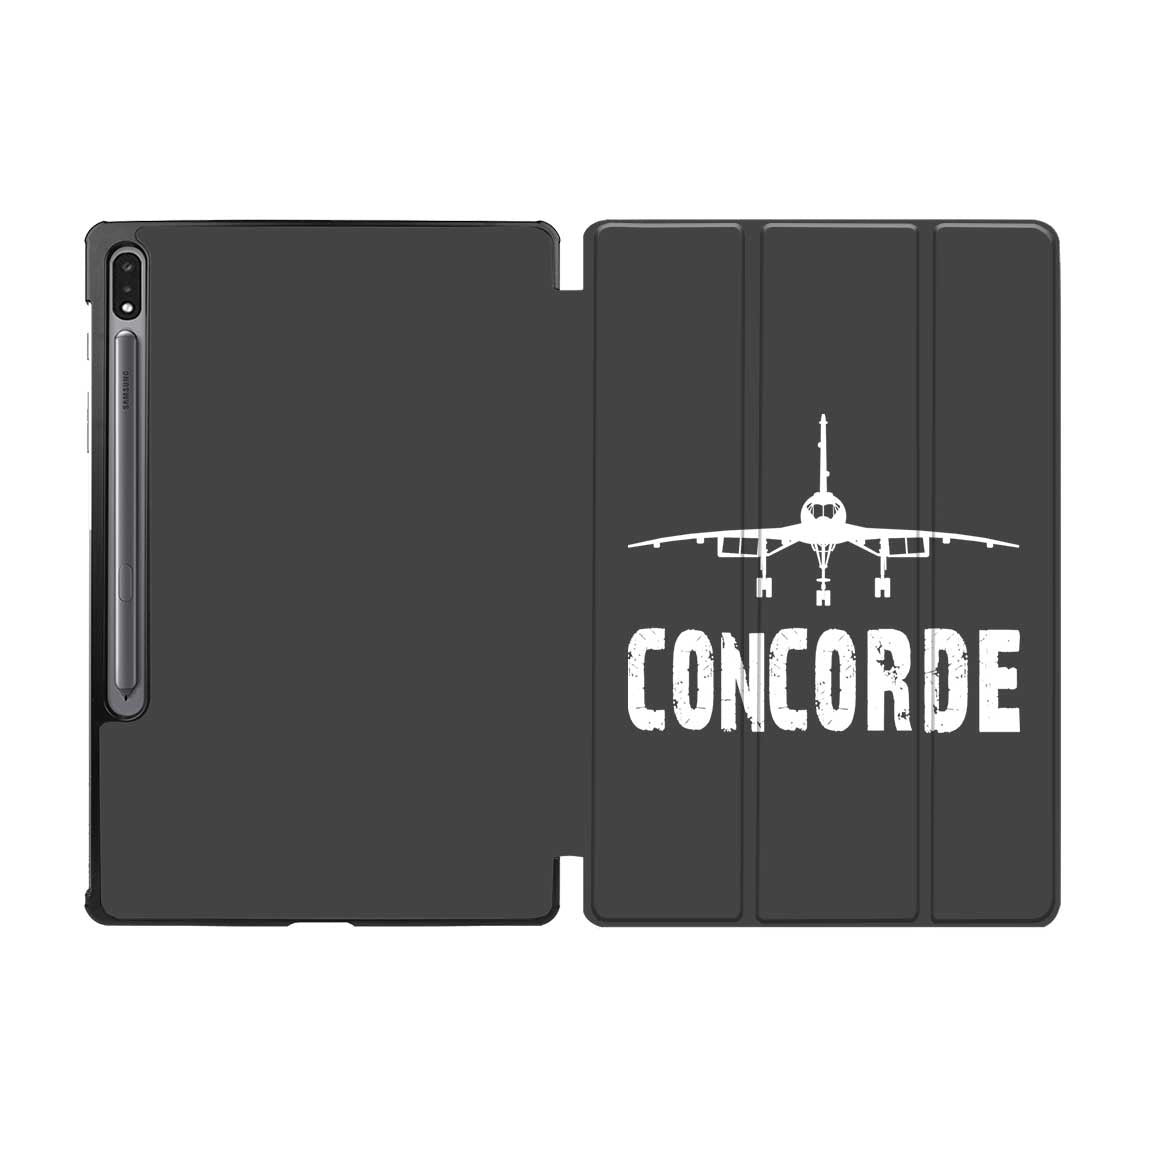 Concorde & Plane Designed Samsung Tablet Cases